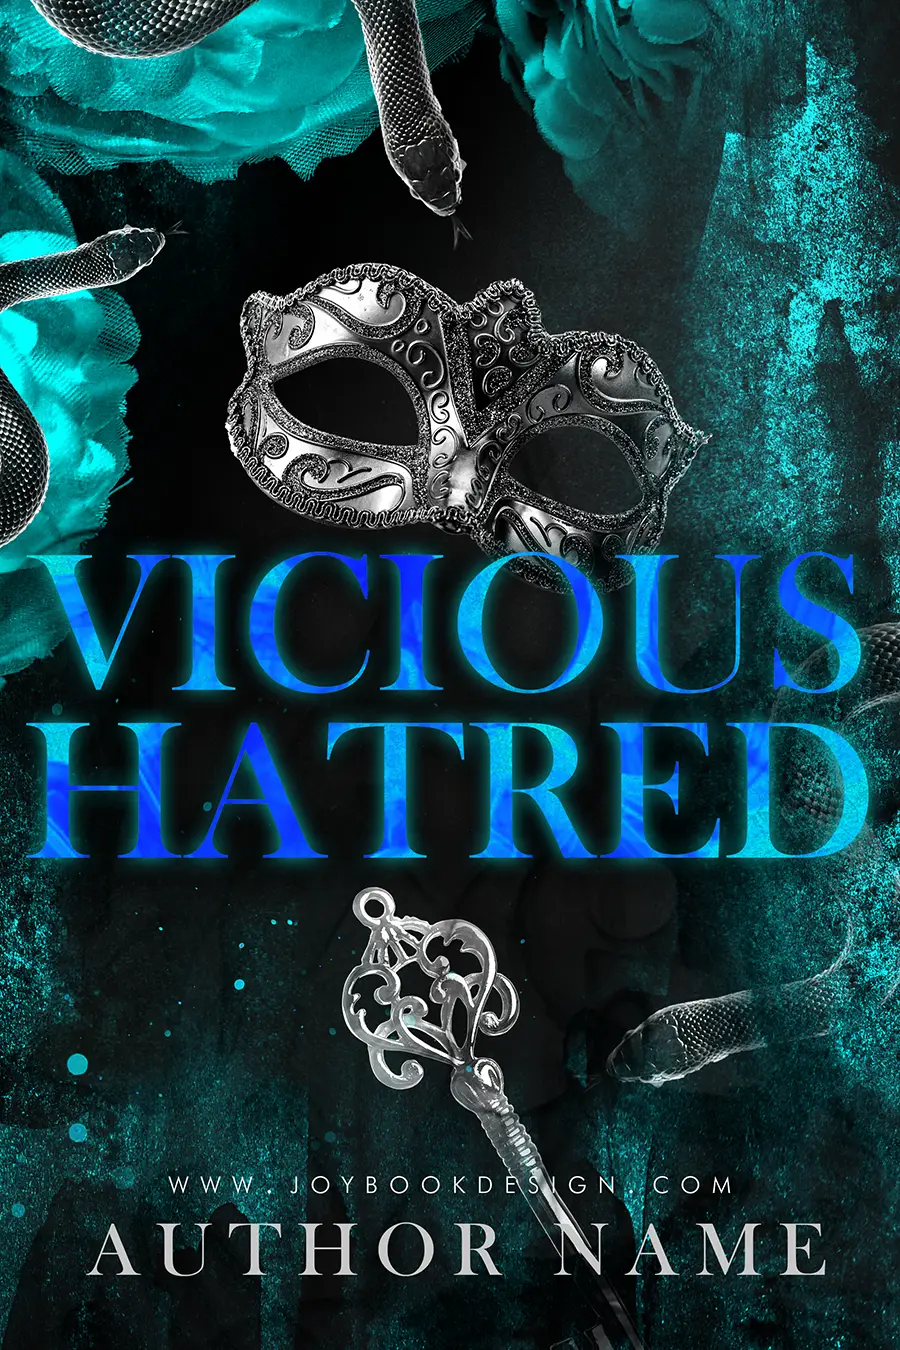 Vicious Hatred (w/ Discreet)